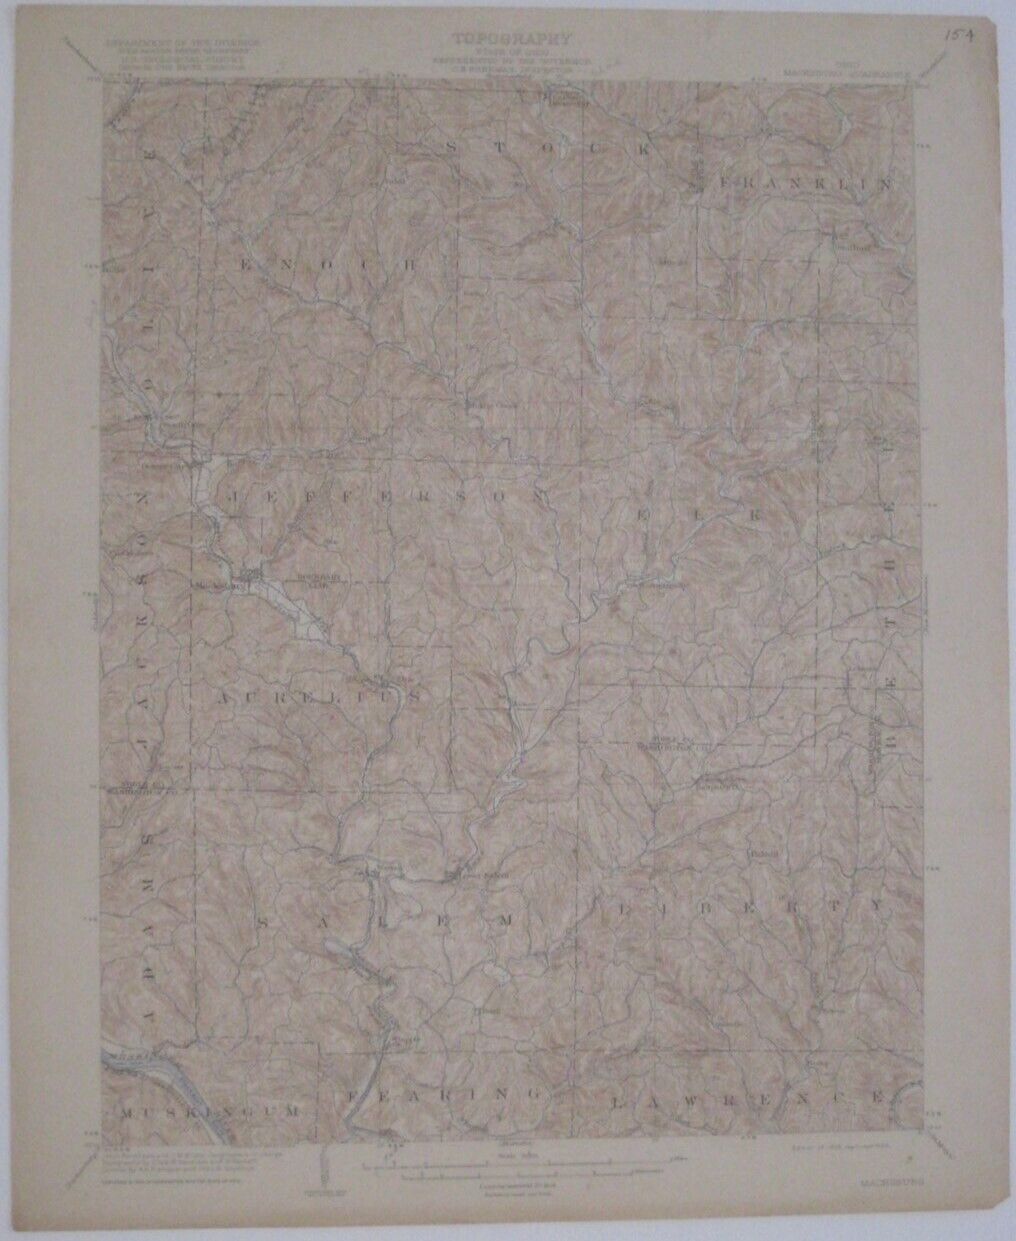 Original 1905 USGS Topo Map MACKSBURG Washington County Ohio Steamboat Route RRs